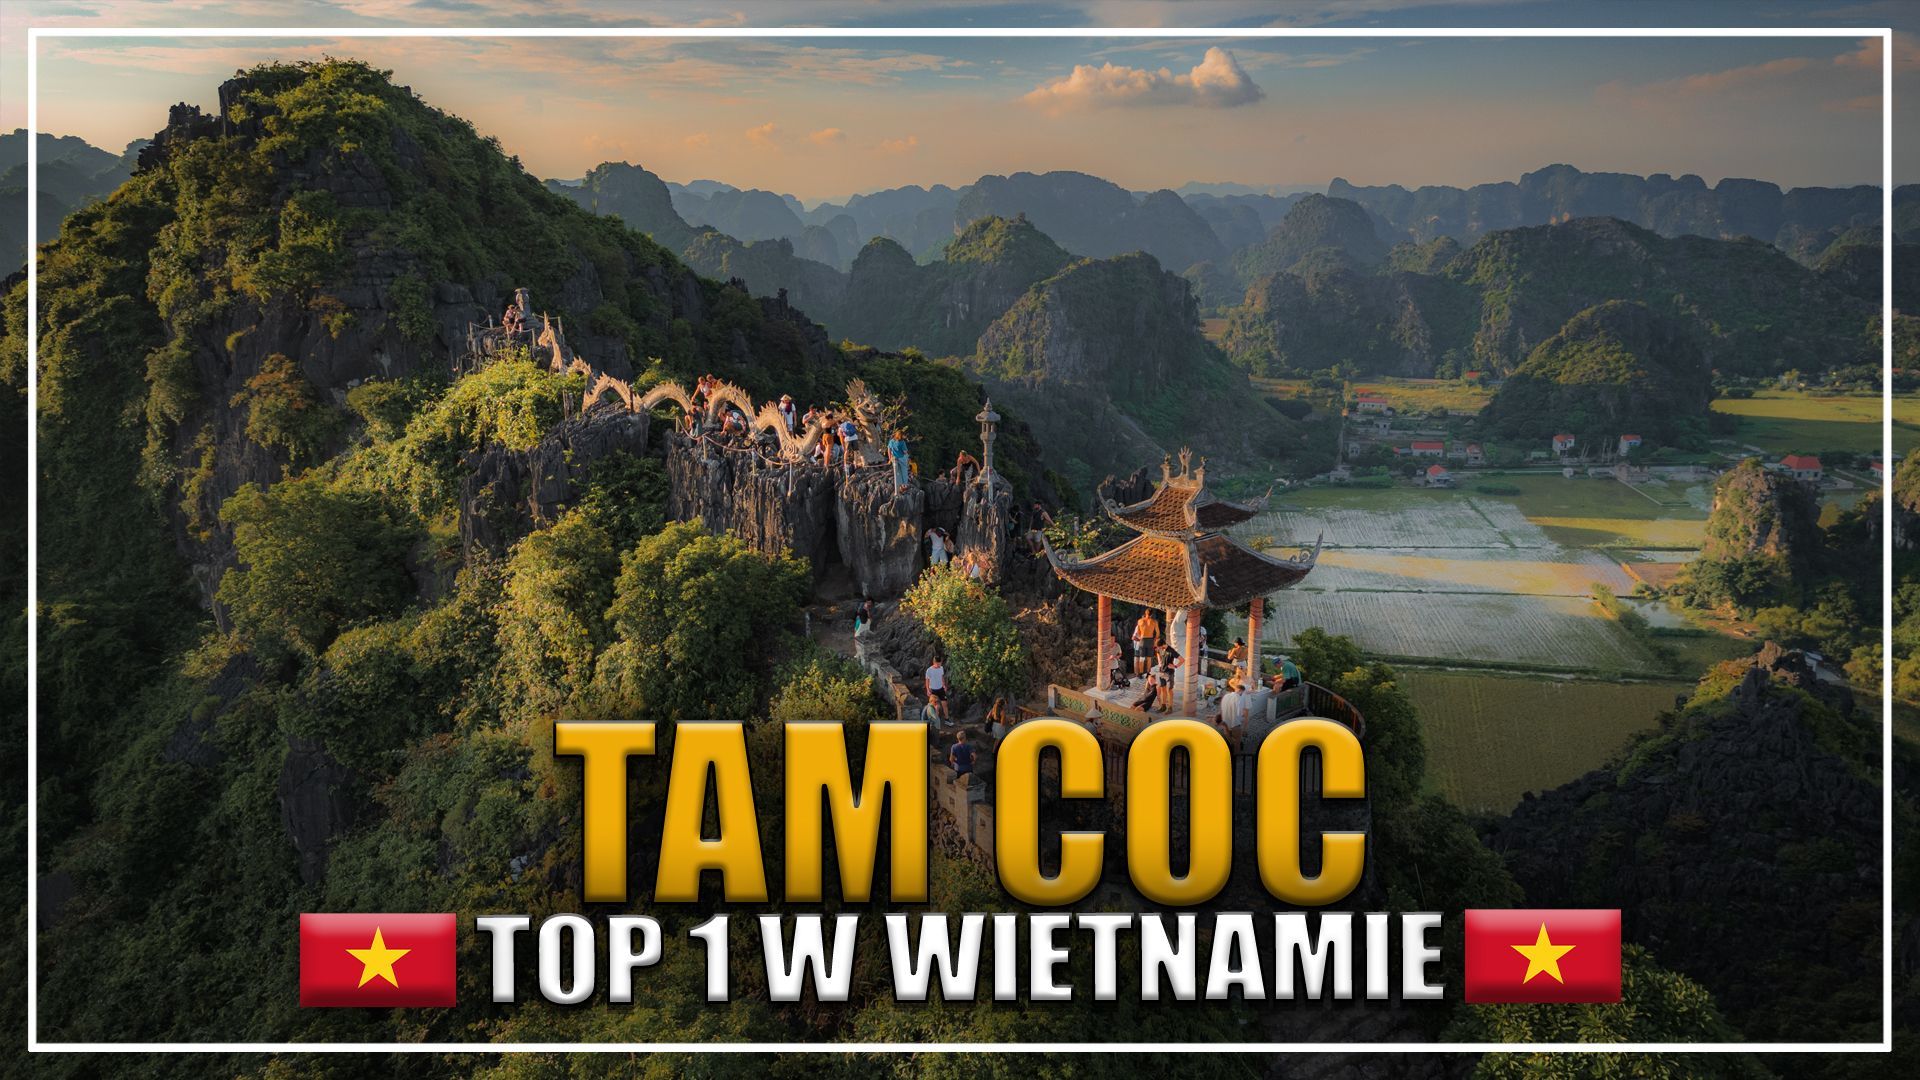 Trang An, Tam Coc, Wietnam